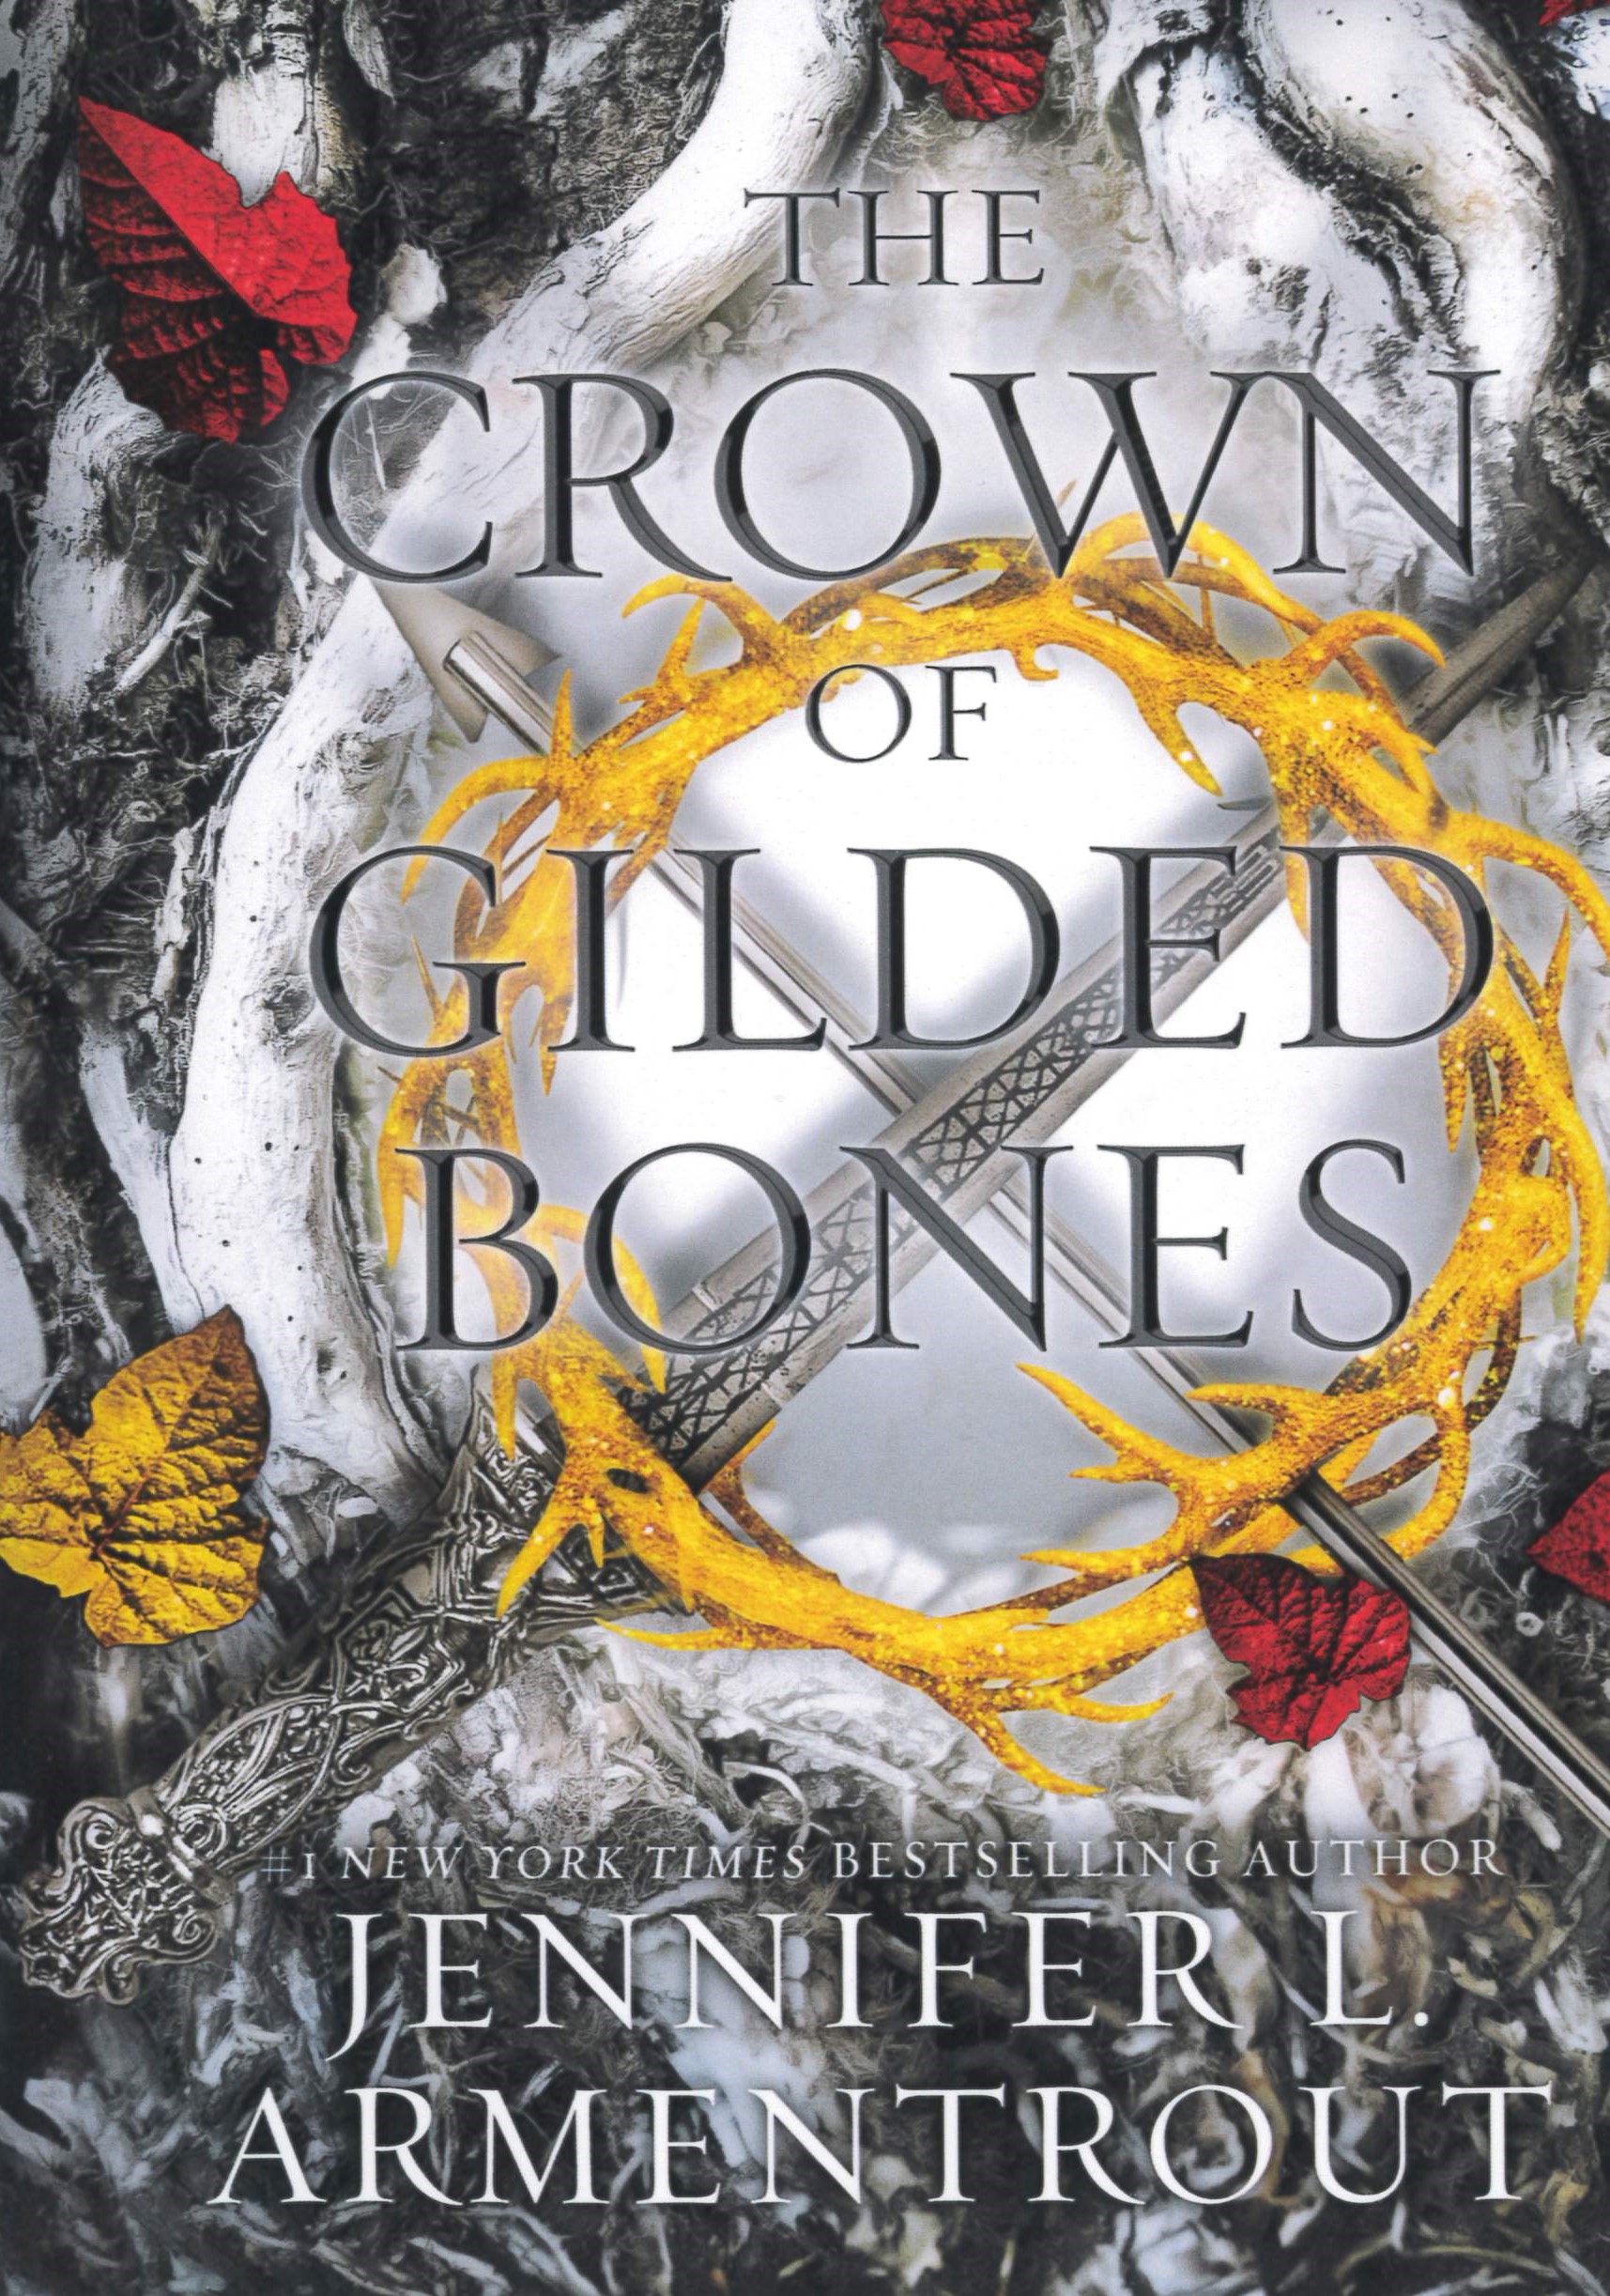 The crown of gilded bones /